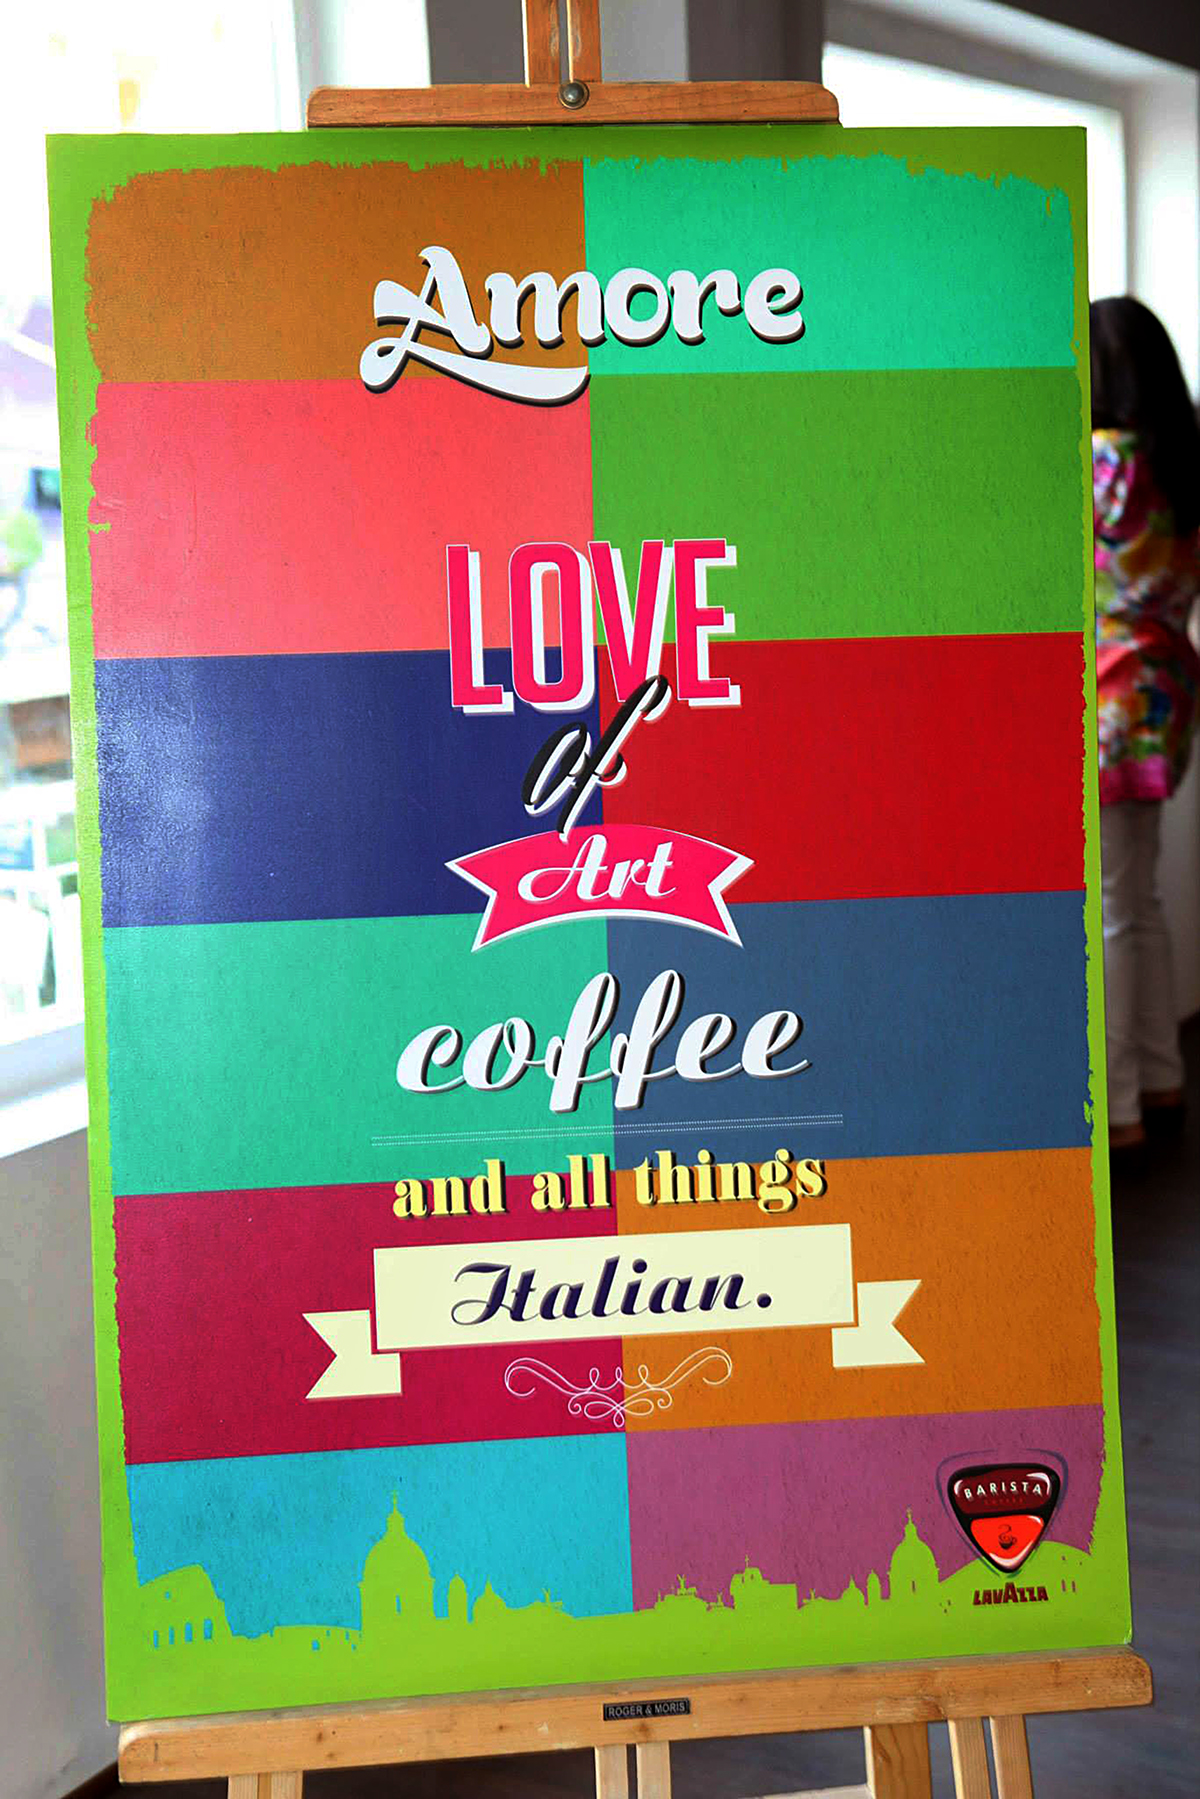 Barista lavazza Pop Art menu amore cup